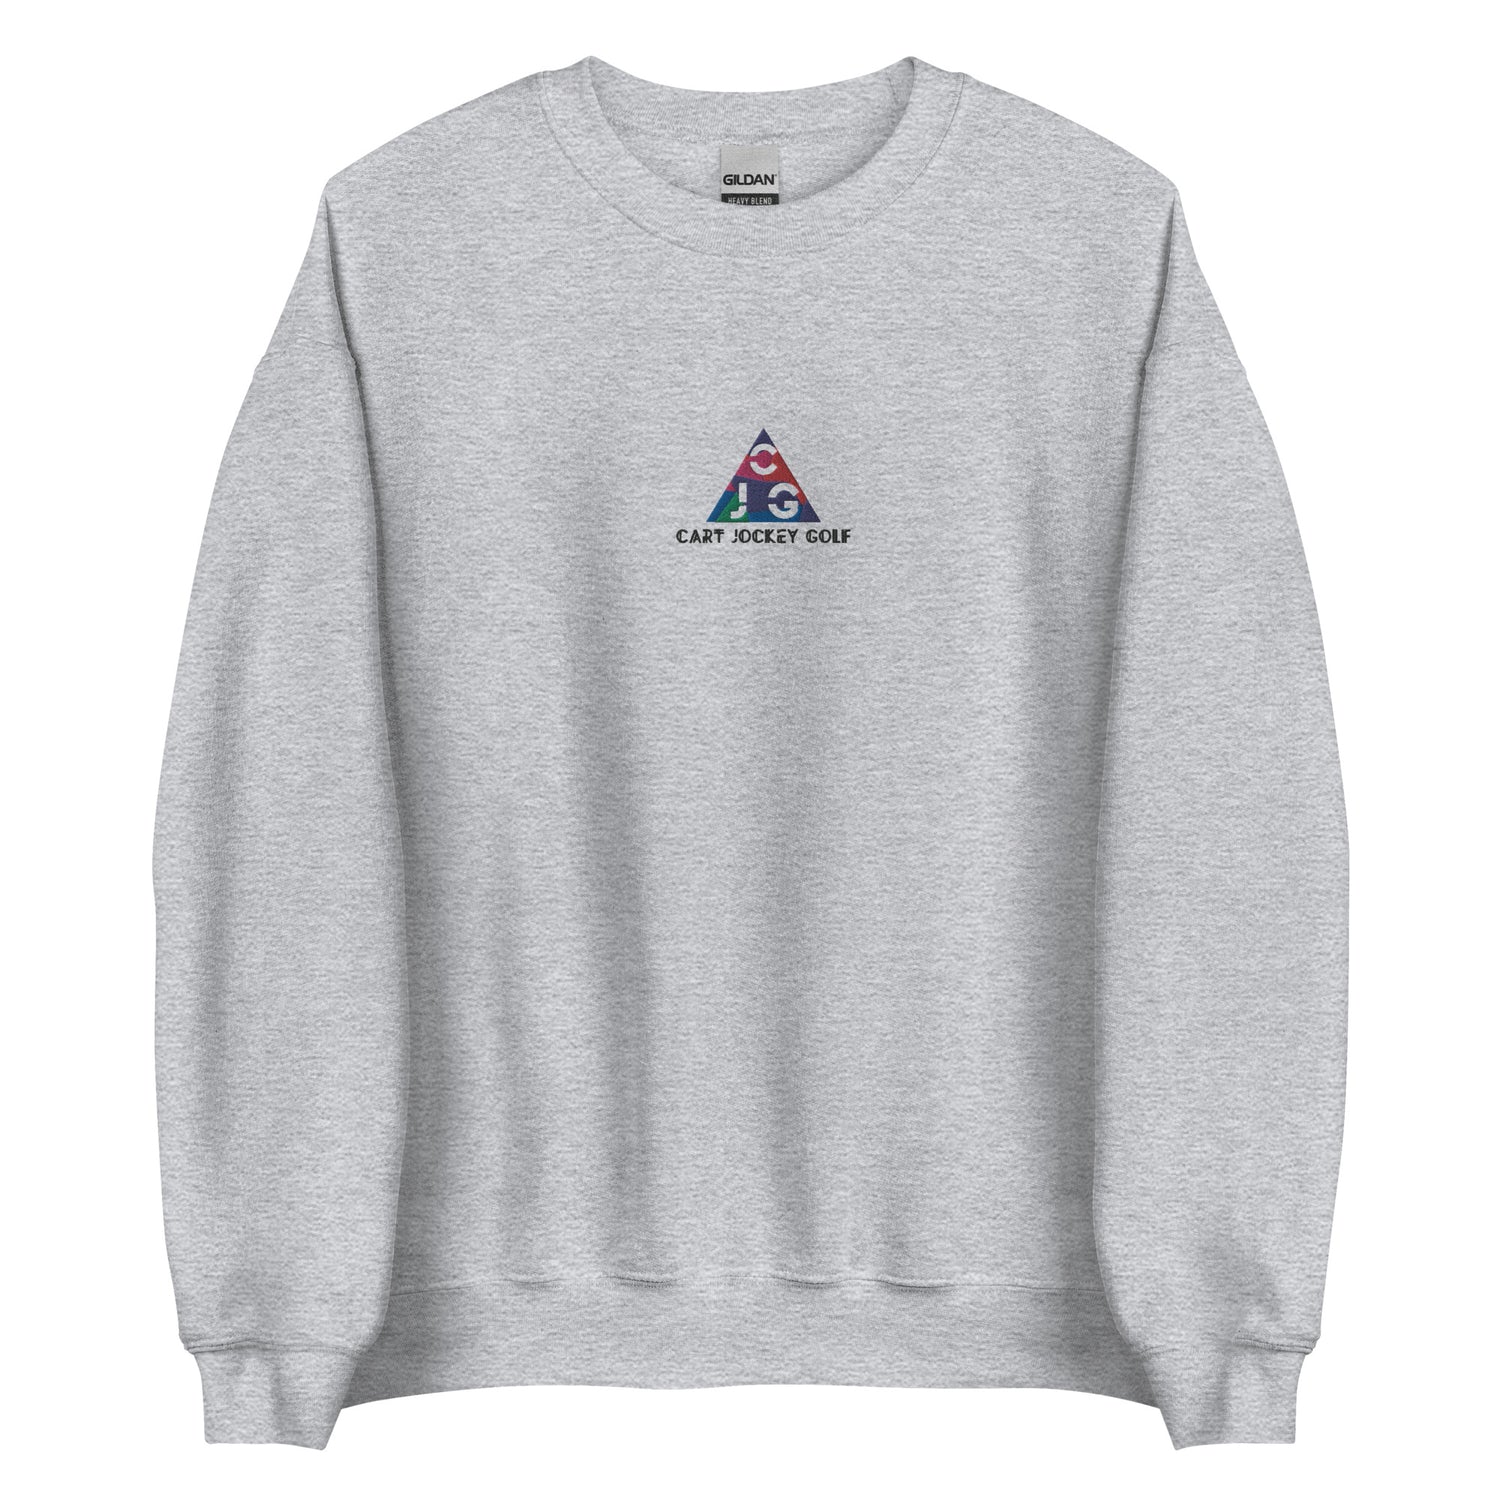 a grey Triangle Embroidered Crewneck sweatshirt from Cart Jockey Golf.